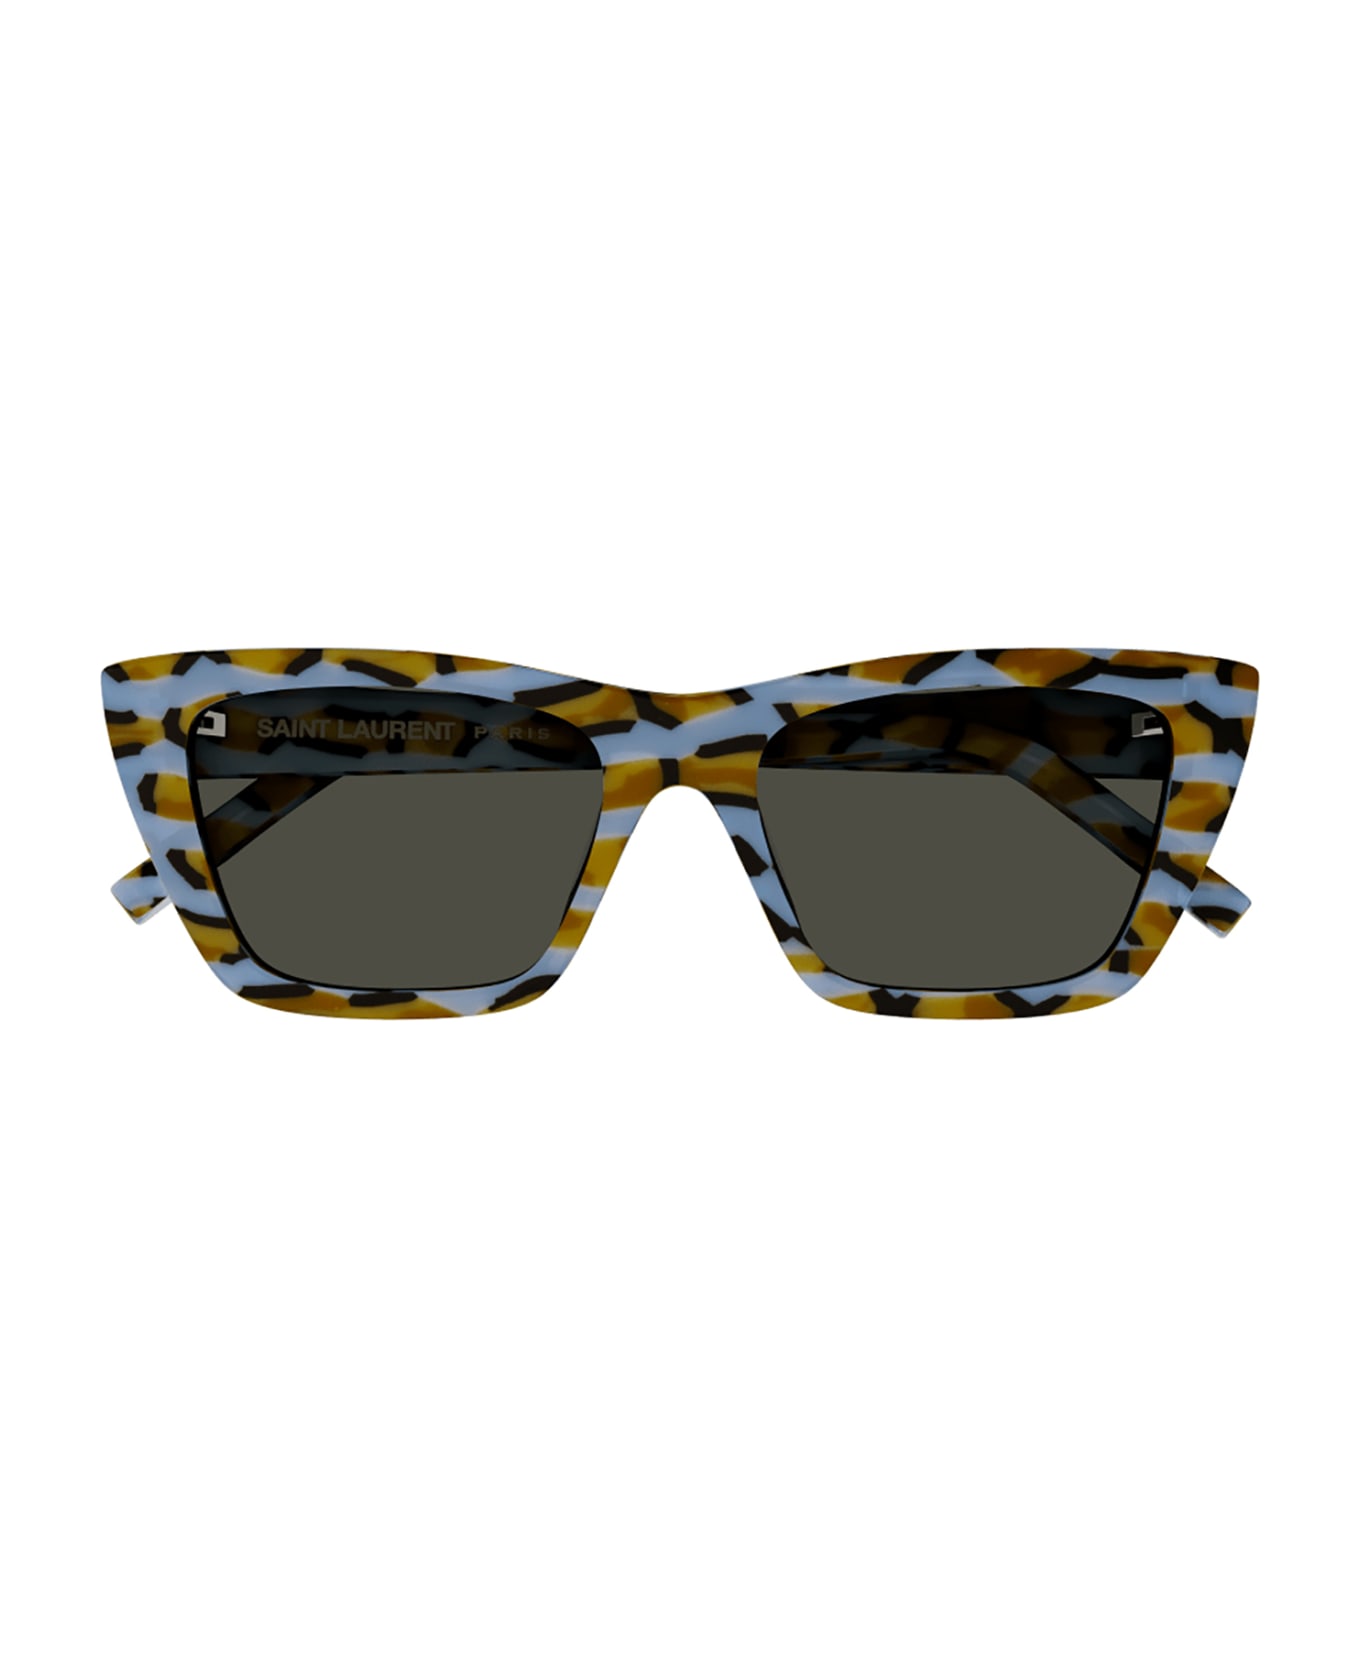 Saint Laurent Eyewear Sl 276 Mica Sunglasses - 035 violet violet grey